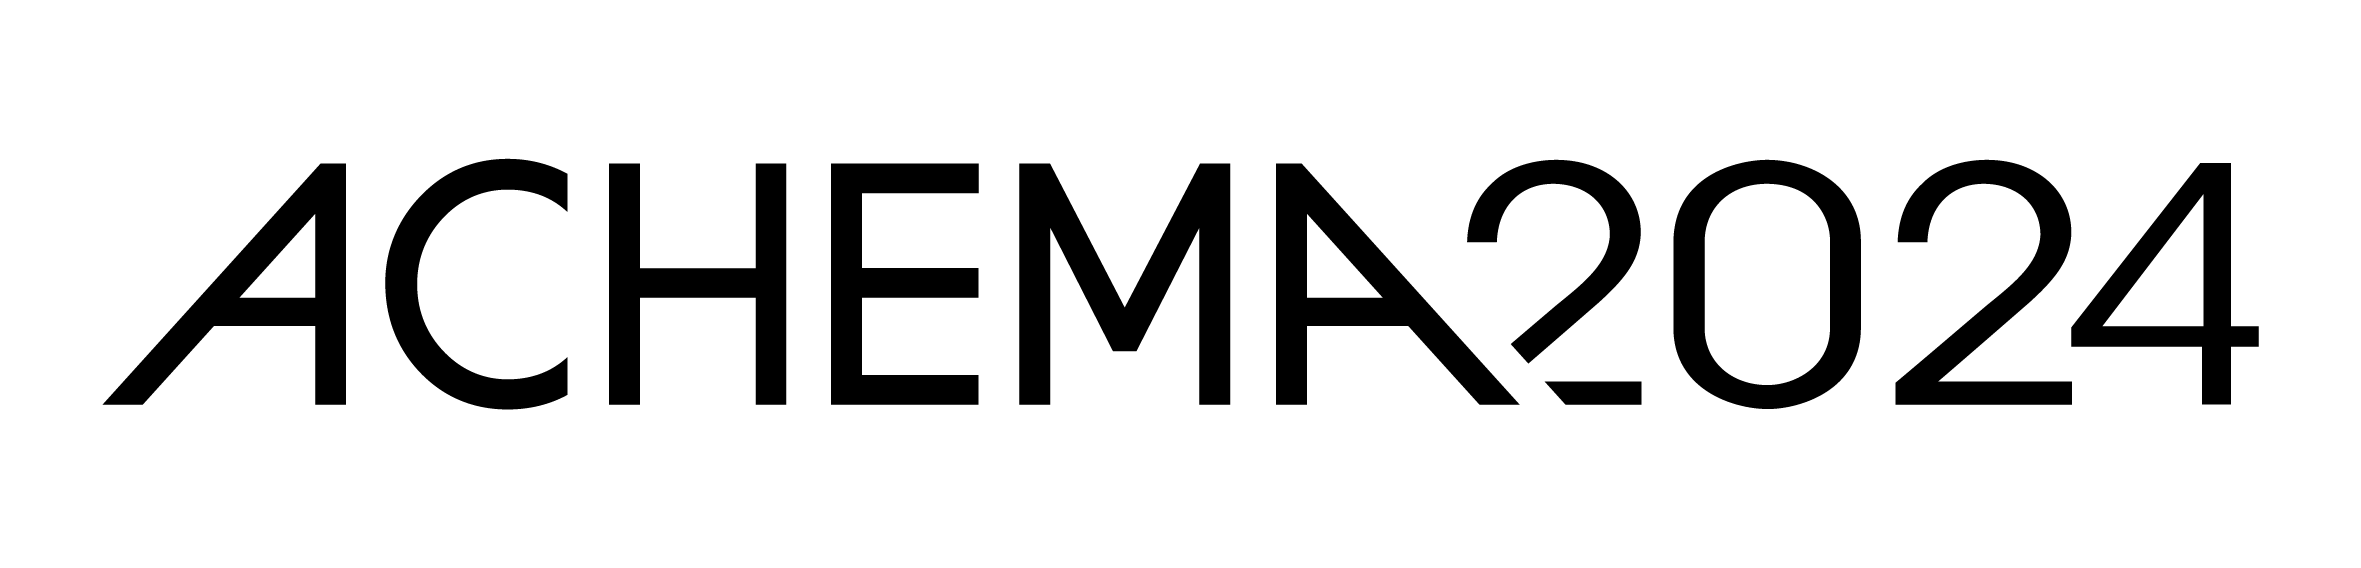 Anuga FoodTec Logo